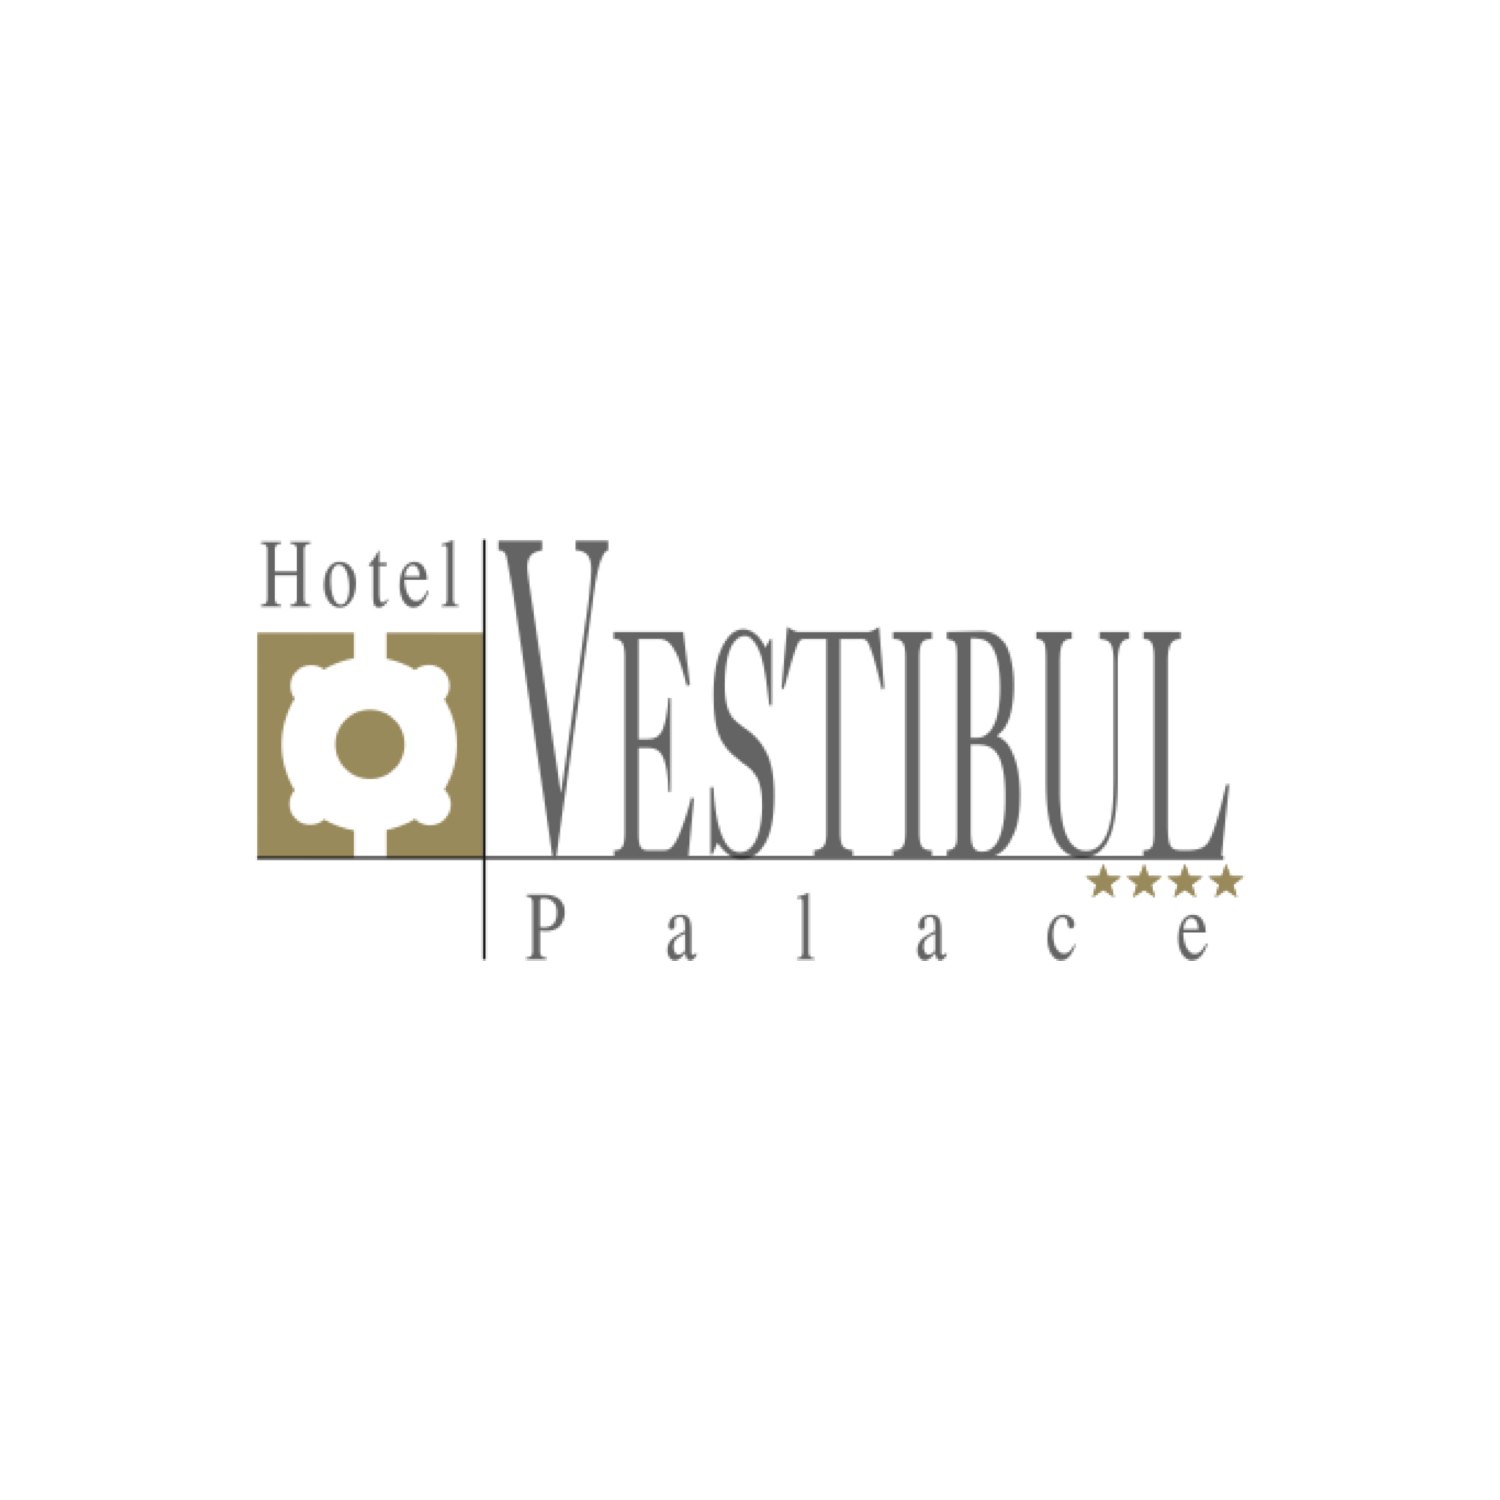 Hotel Vestibul Palace - Split, Croatia